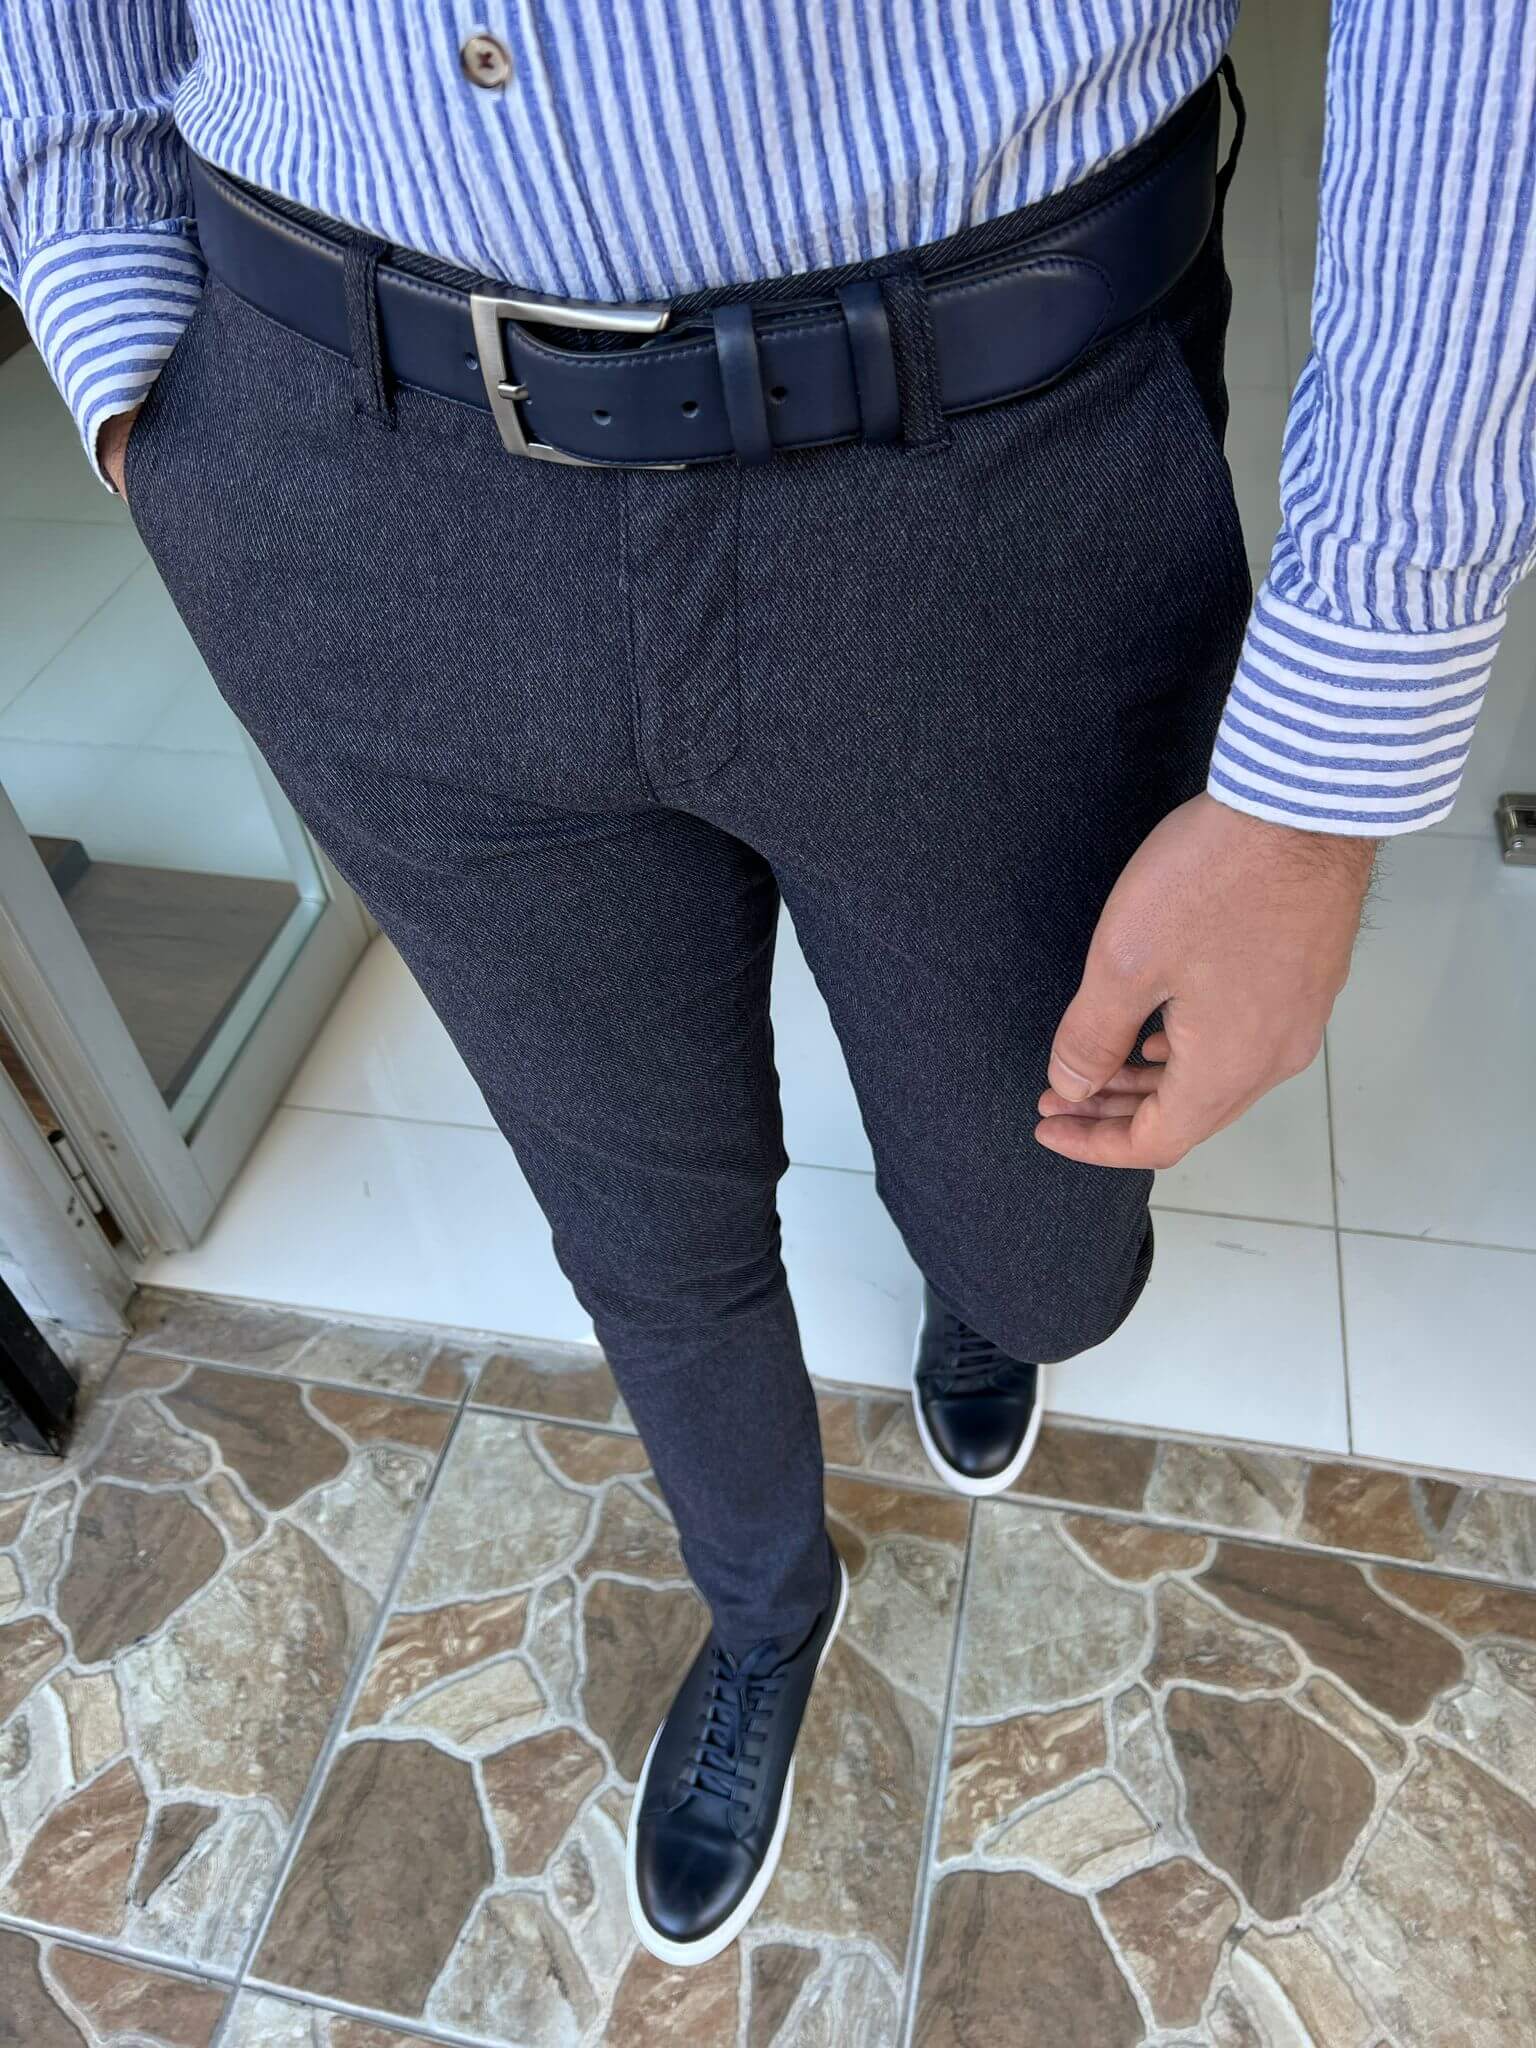 Men's Plaid Slim Fit Pencil Pants Formal Casual Wedding Business Office  Trousers | eBay